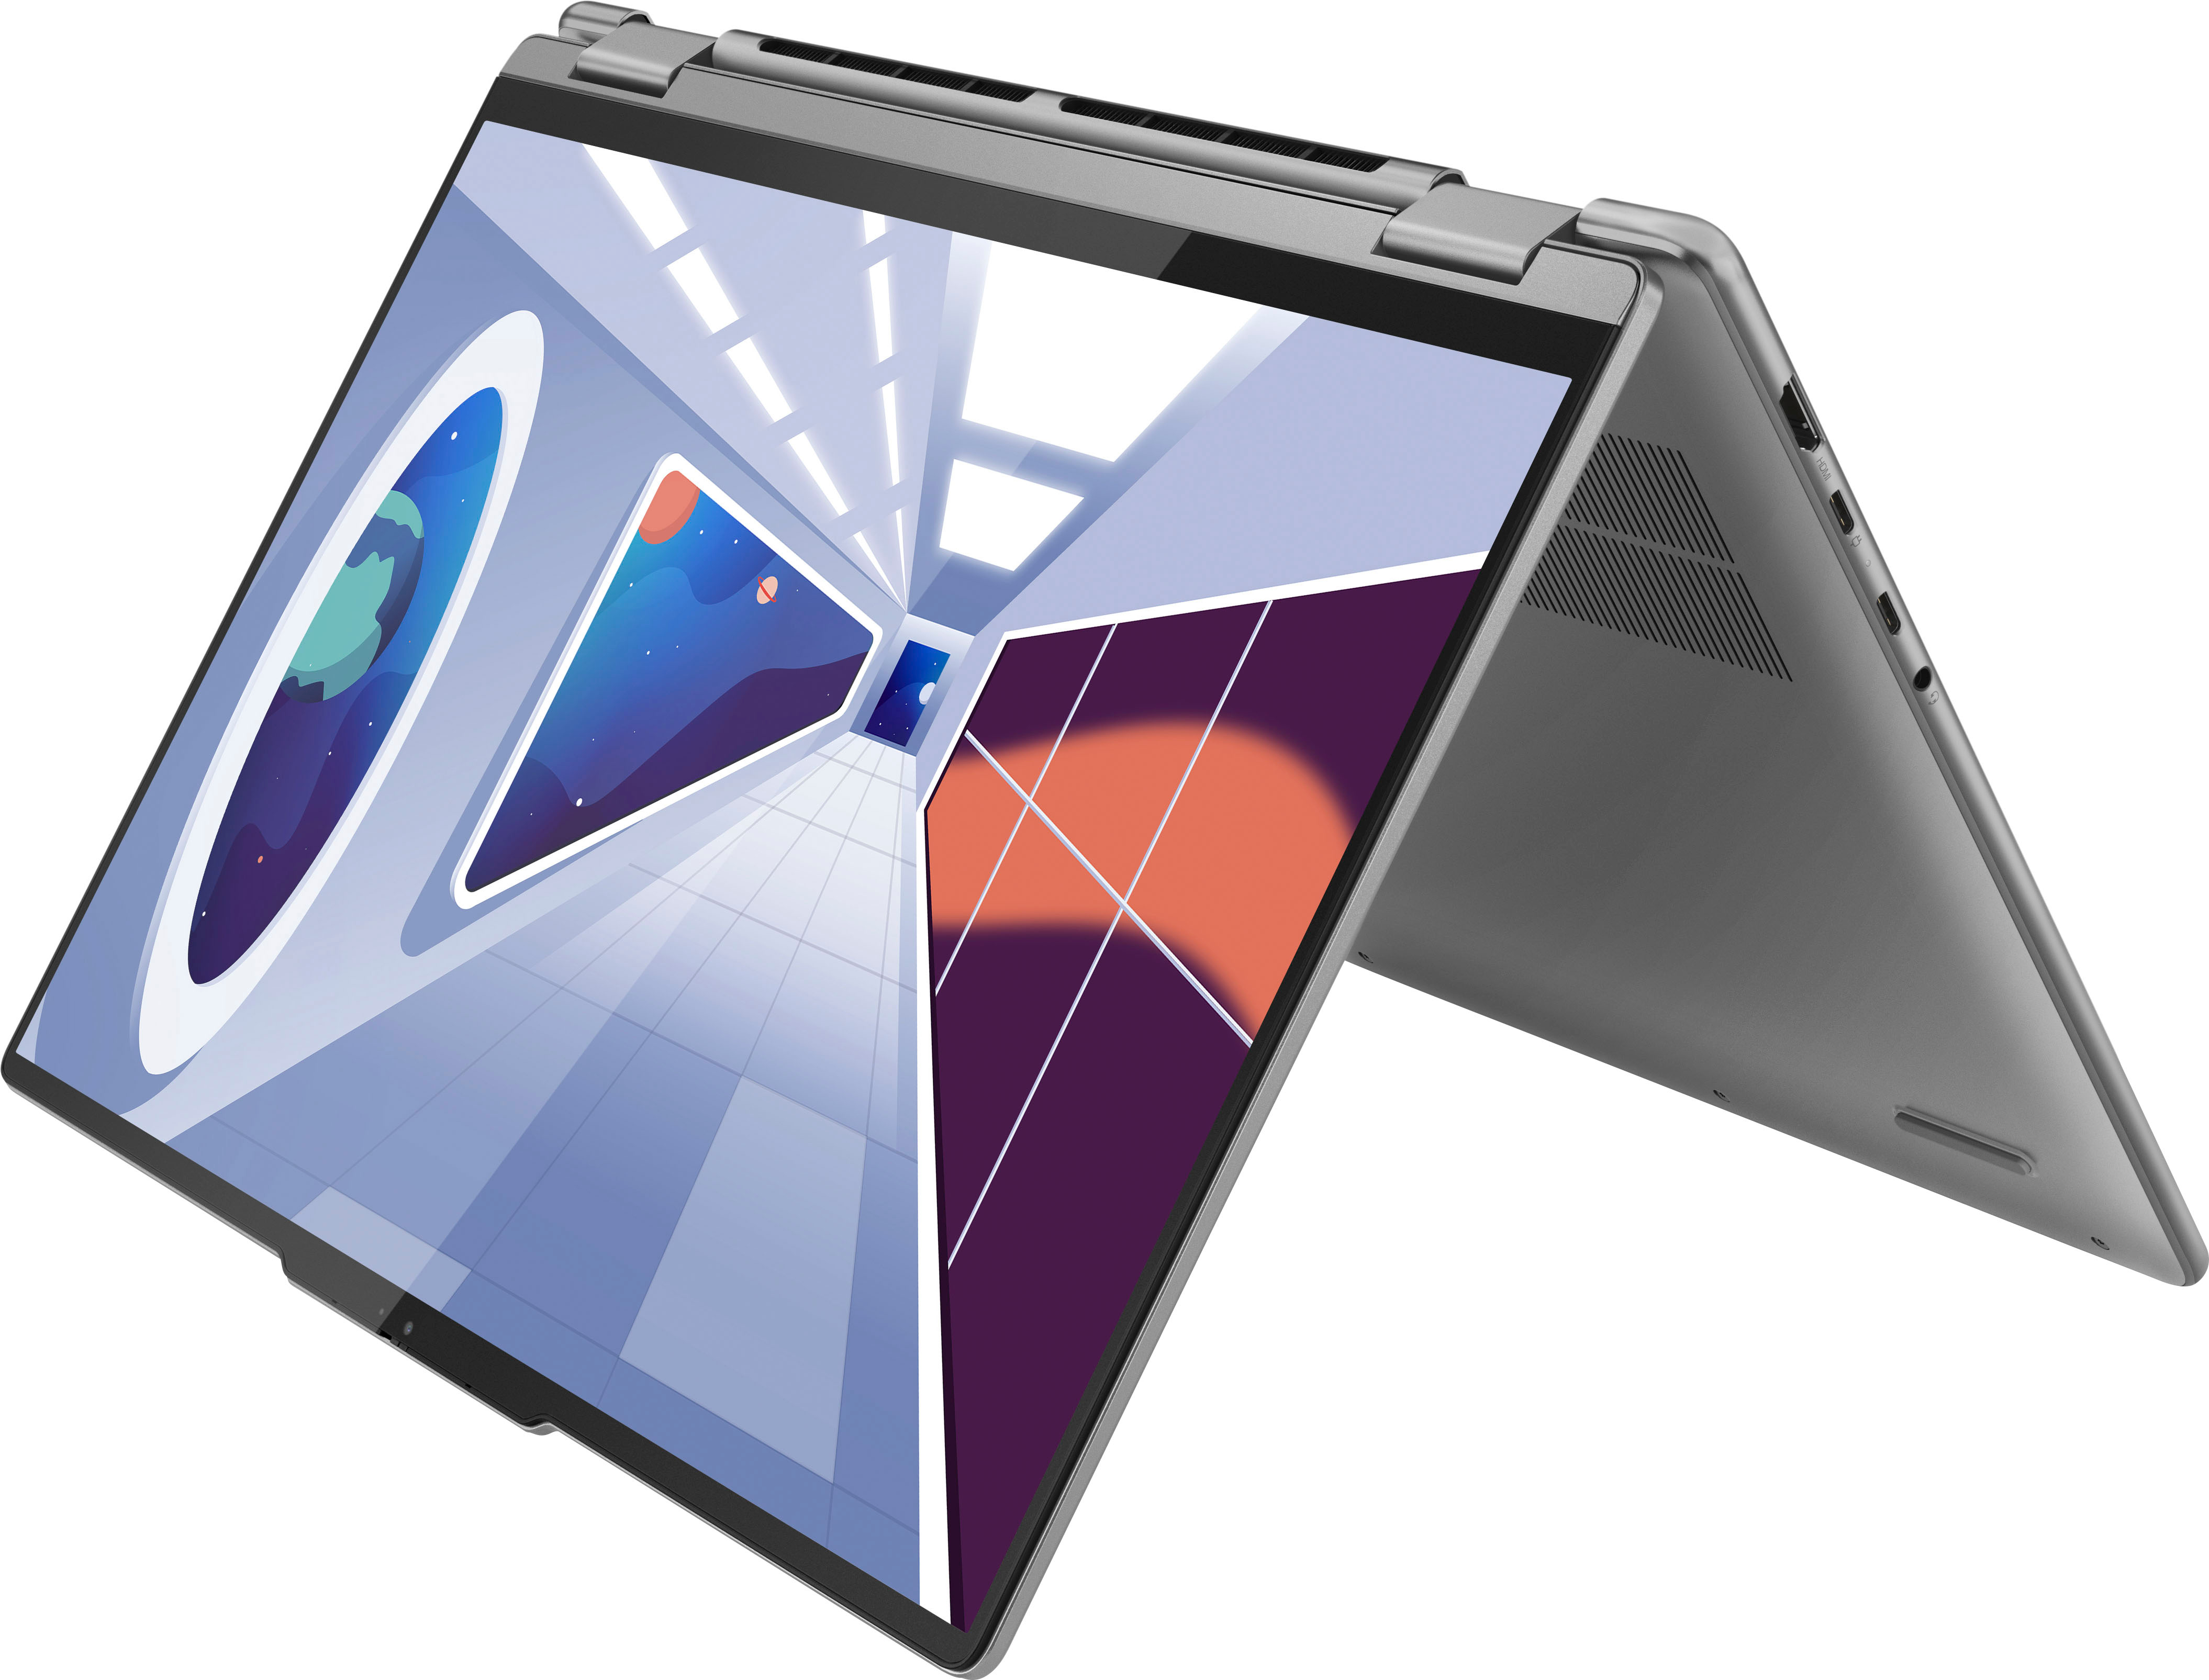 Yoga 7 (16” AMD)  2-in-1 Laptop with AMD Ryzen™ 7000 Processor